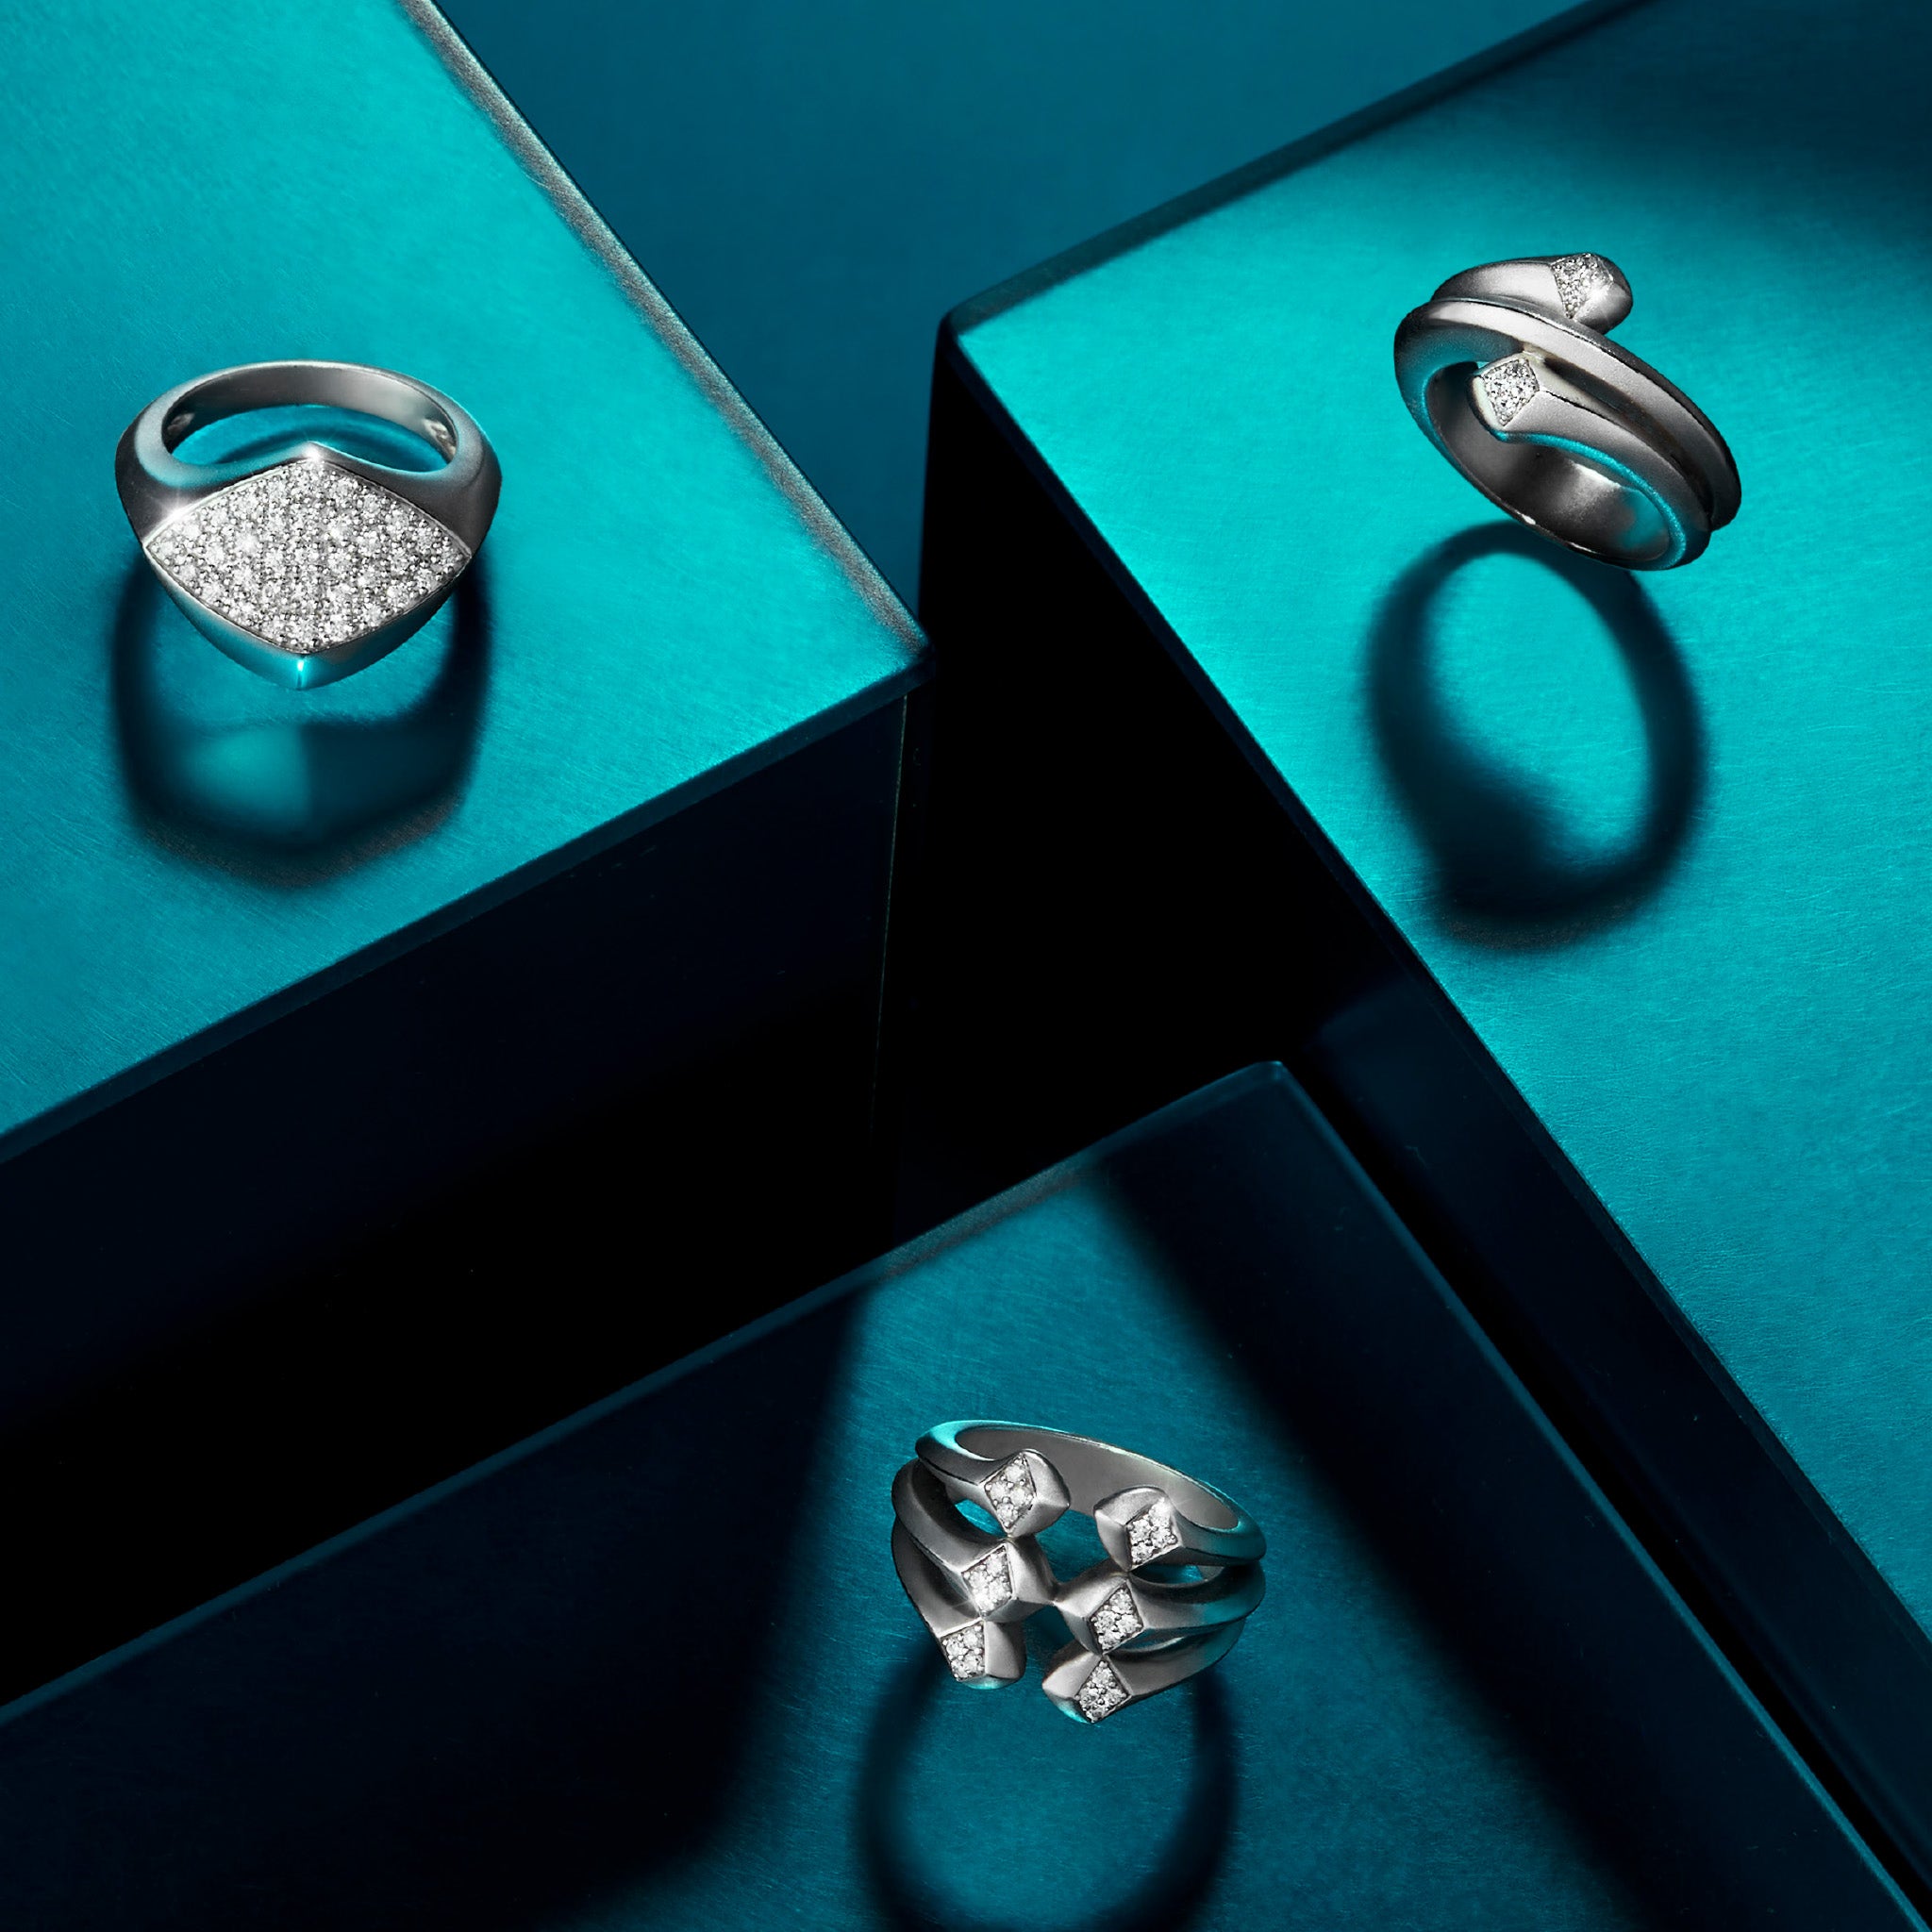 Iris Multi Band Ring with Diamonds